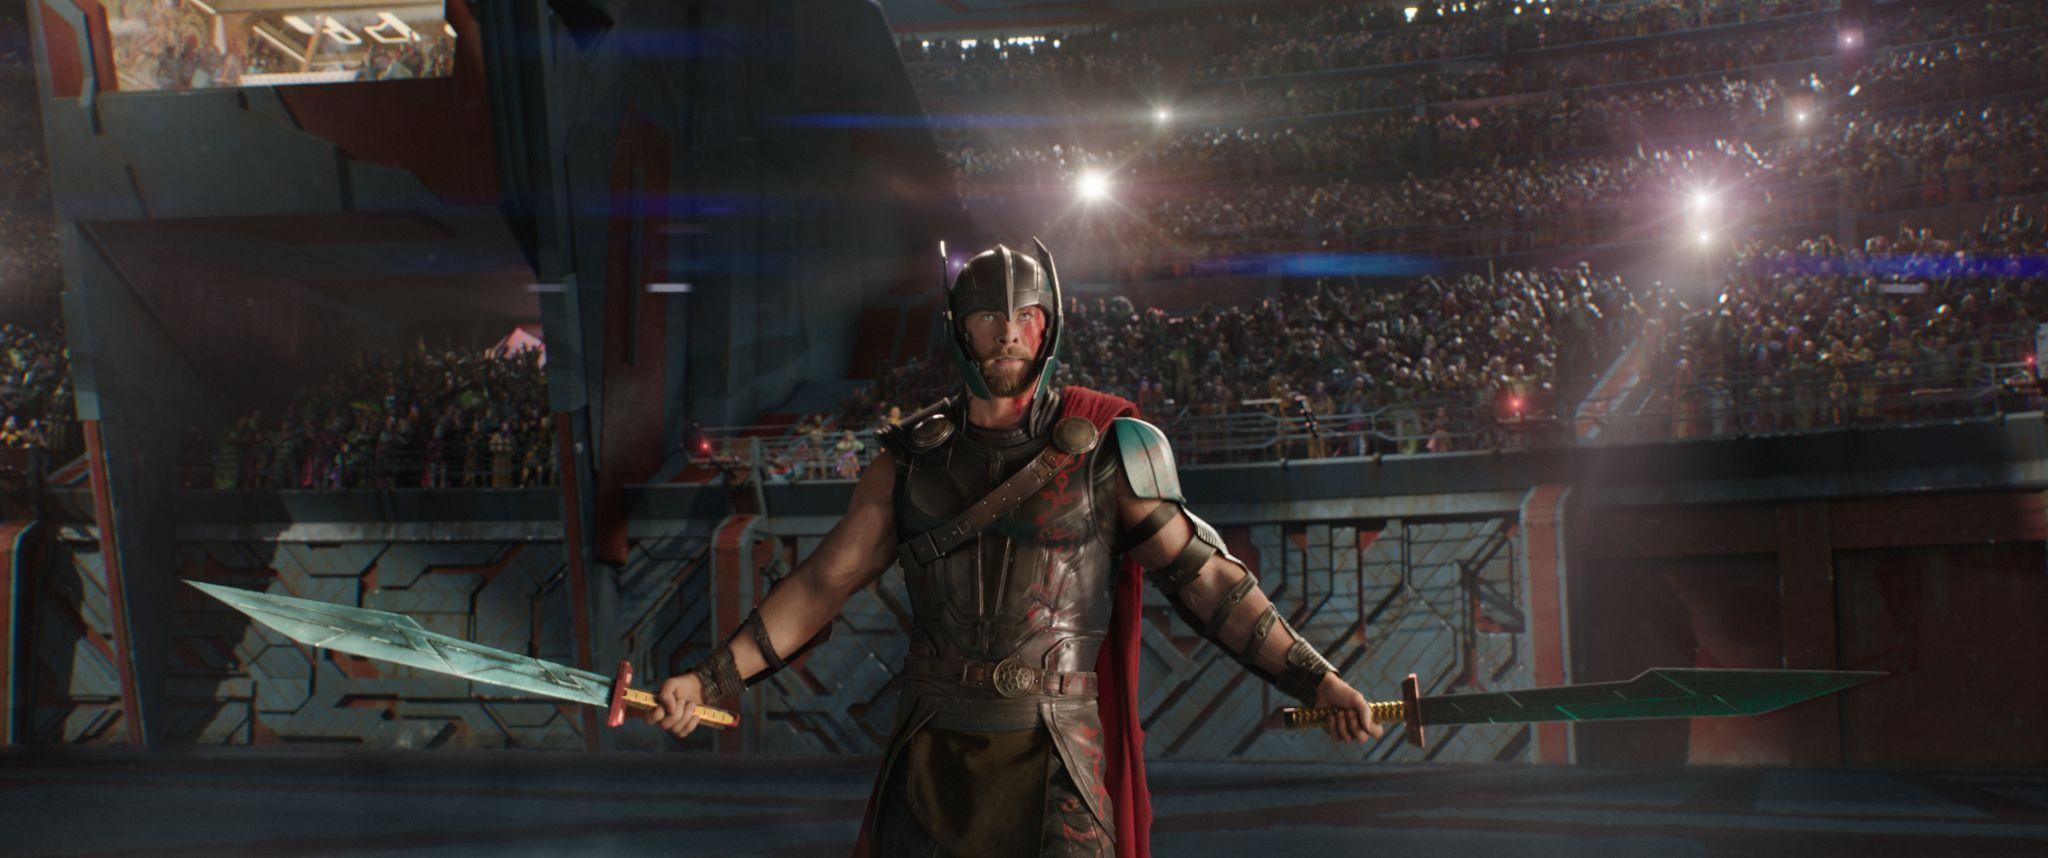 Thor: Ragnarok: New Image